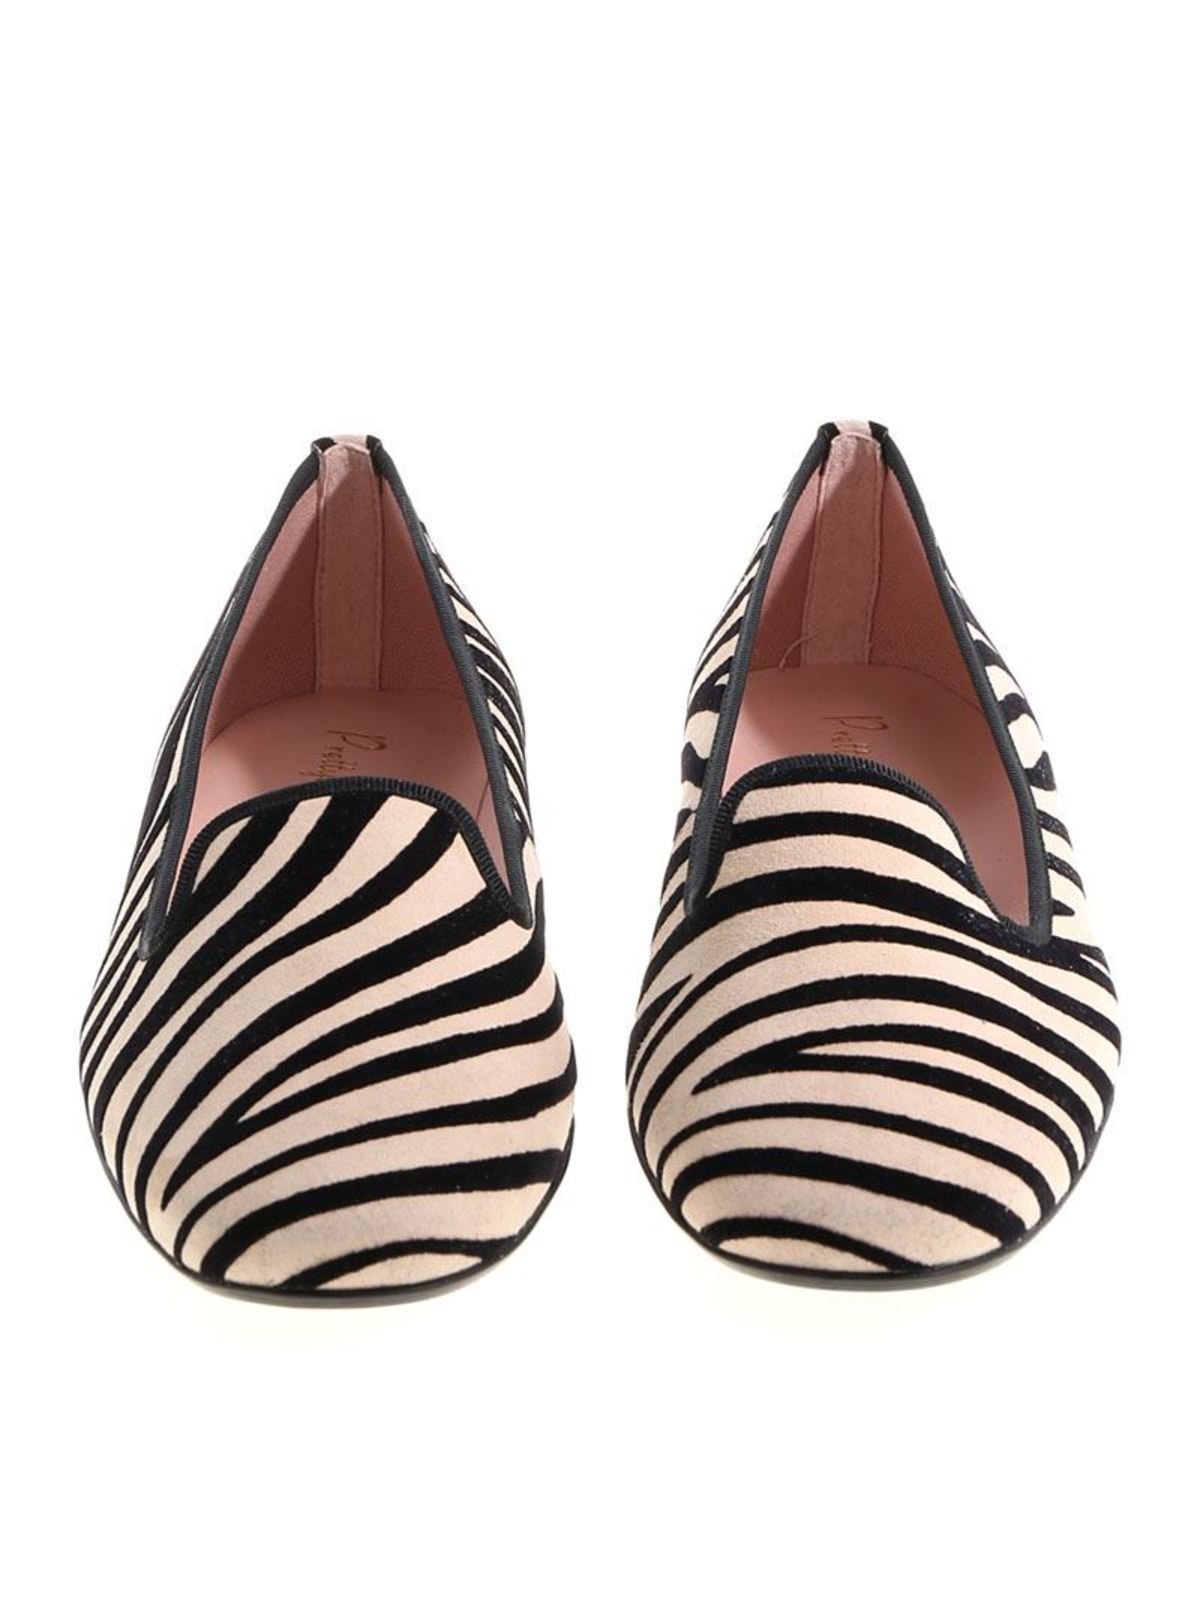 white striped ballerinas - flat shoes 